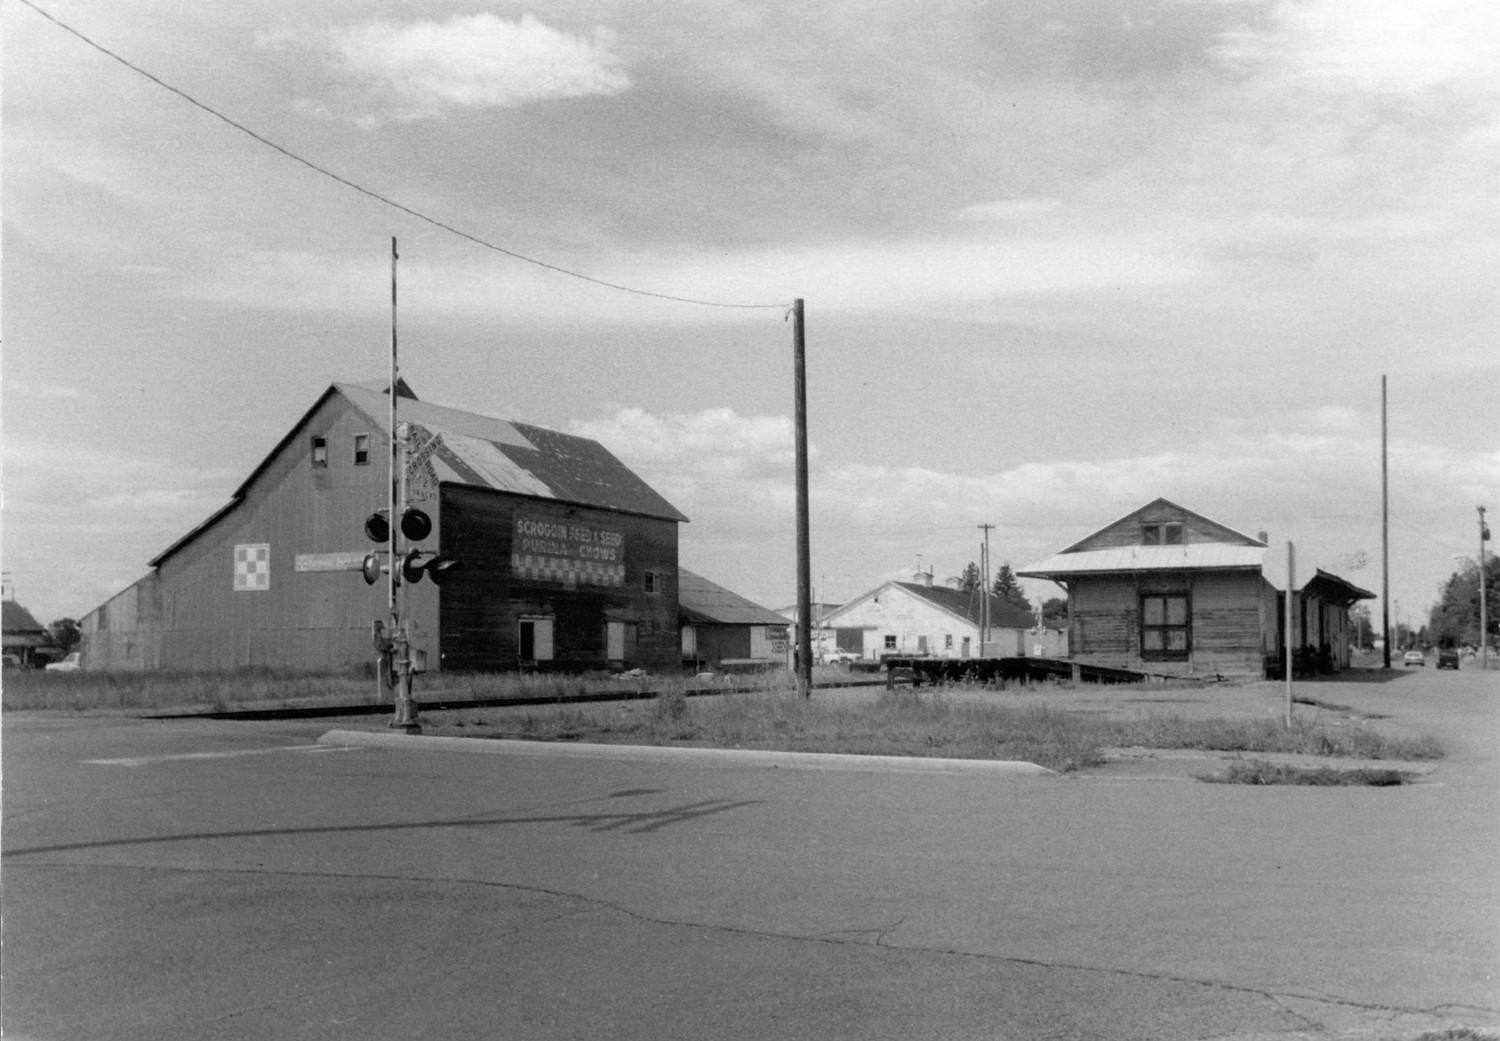 Lebanon Southern Pacific Railroad Depot, Lebanon Oregon Northwest view - General location of the depot (1995)